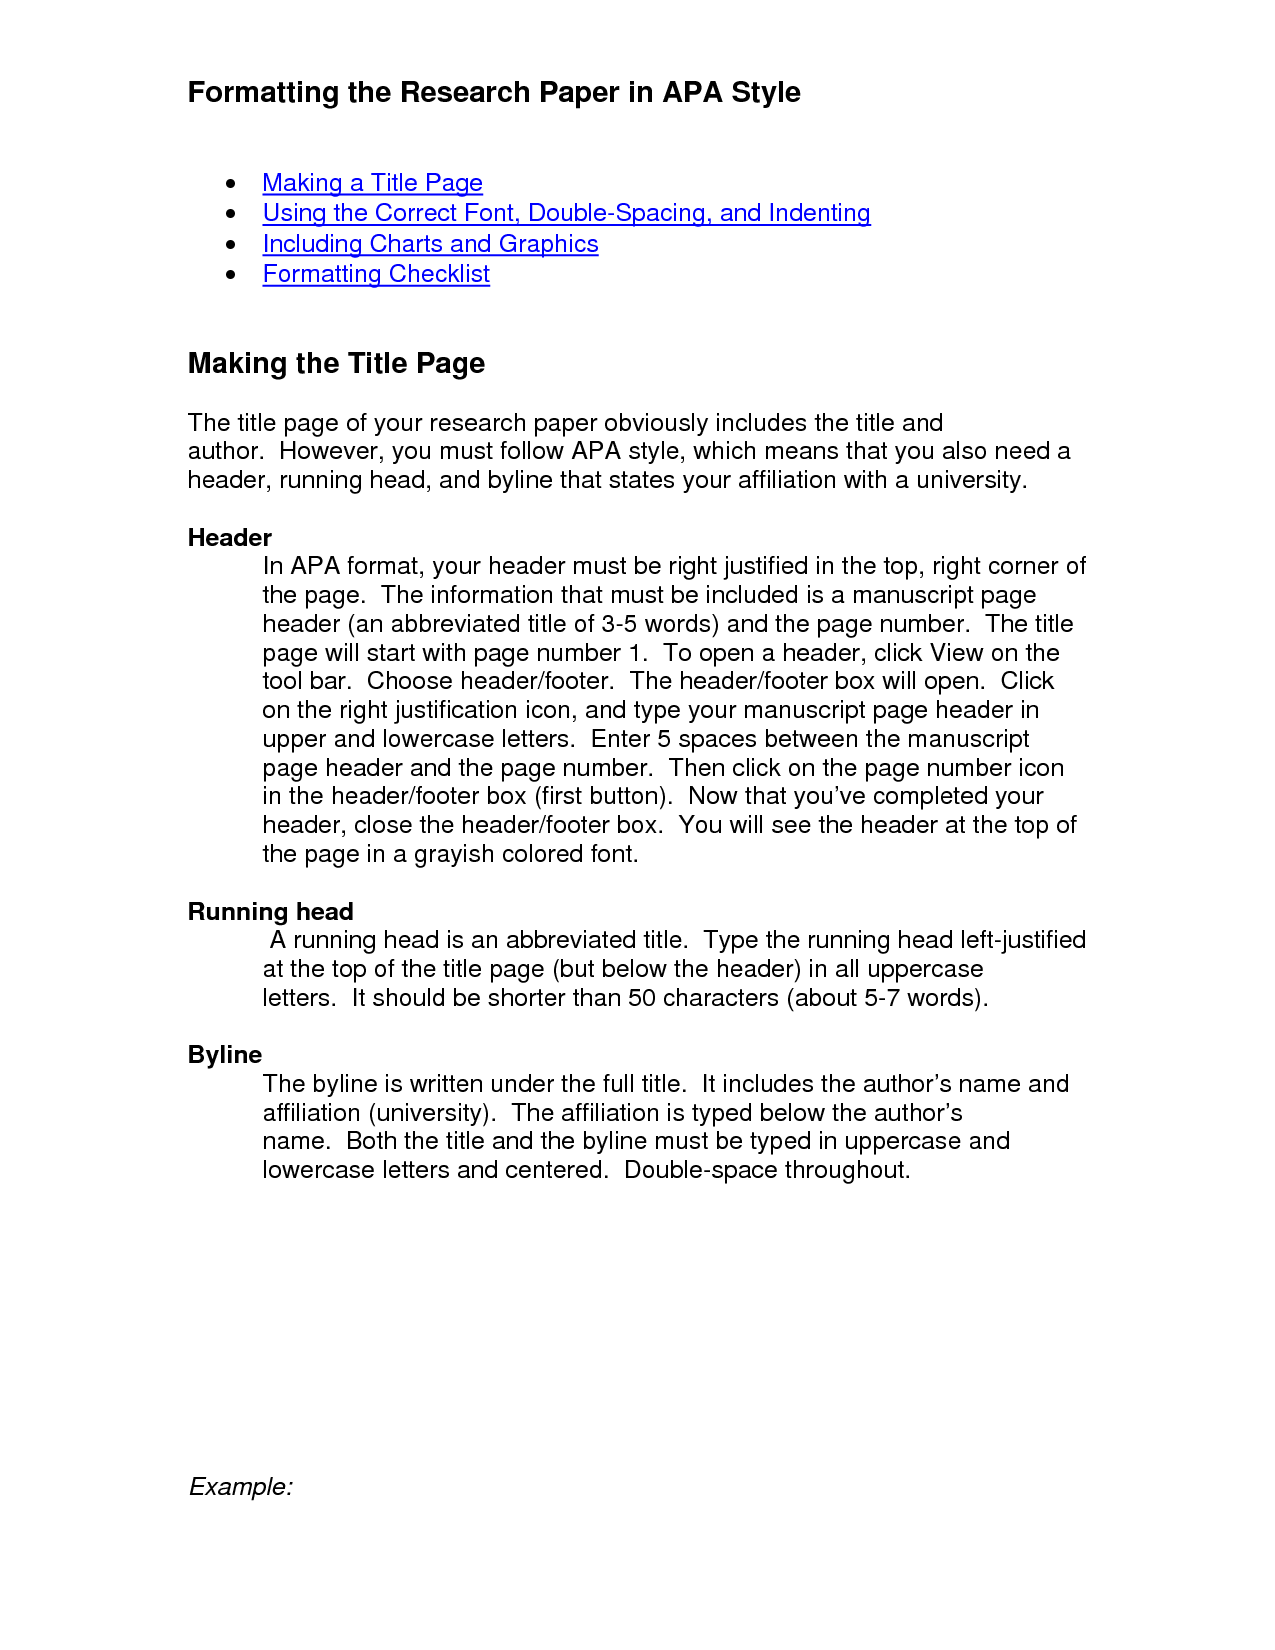 Standard apa essay/report format